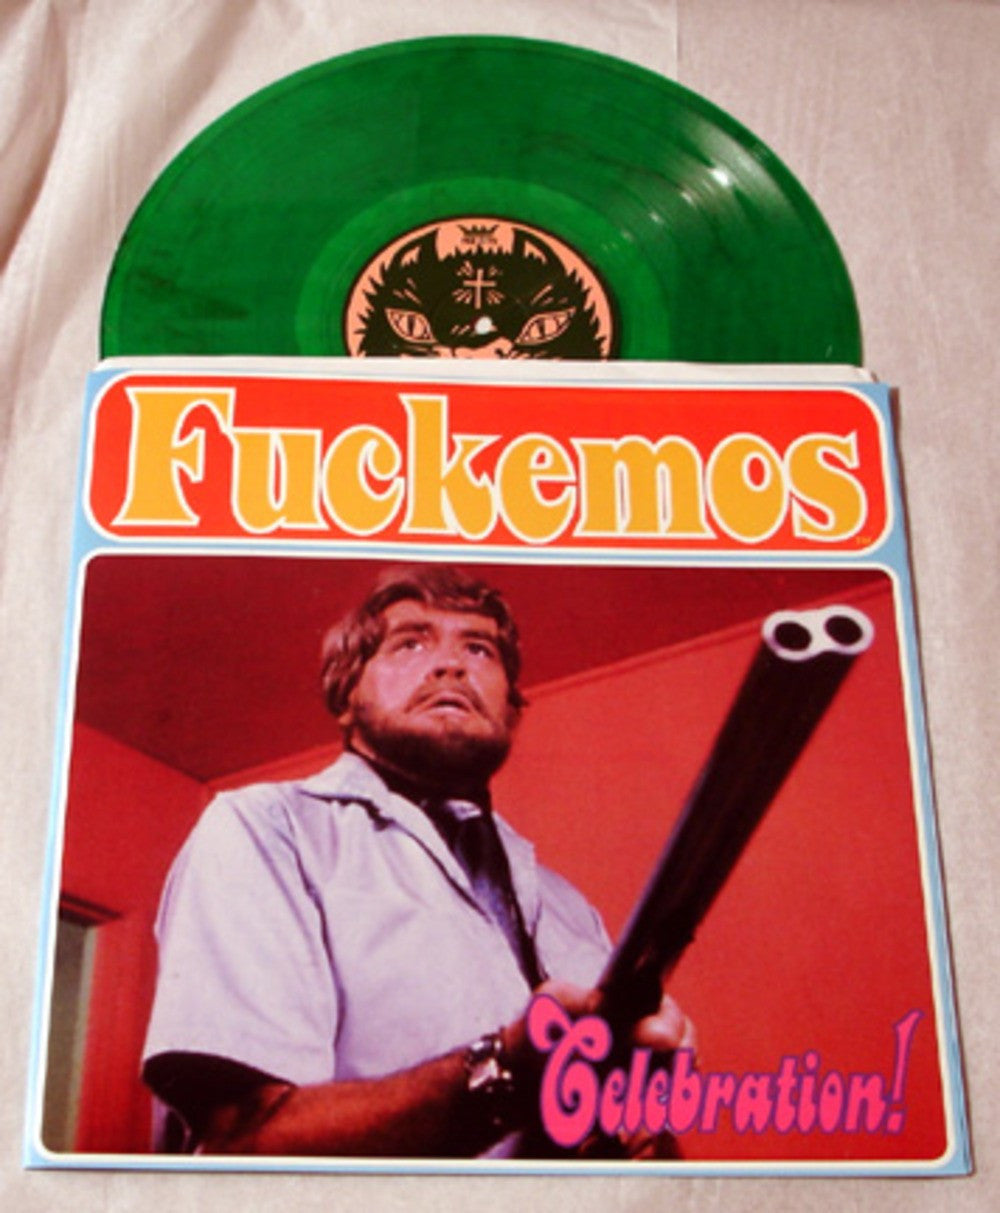 Fuckemos "Celebration" 1997 Colored Vinyl Art By Kozik